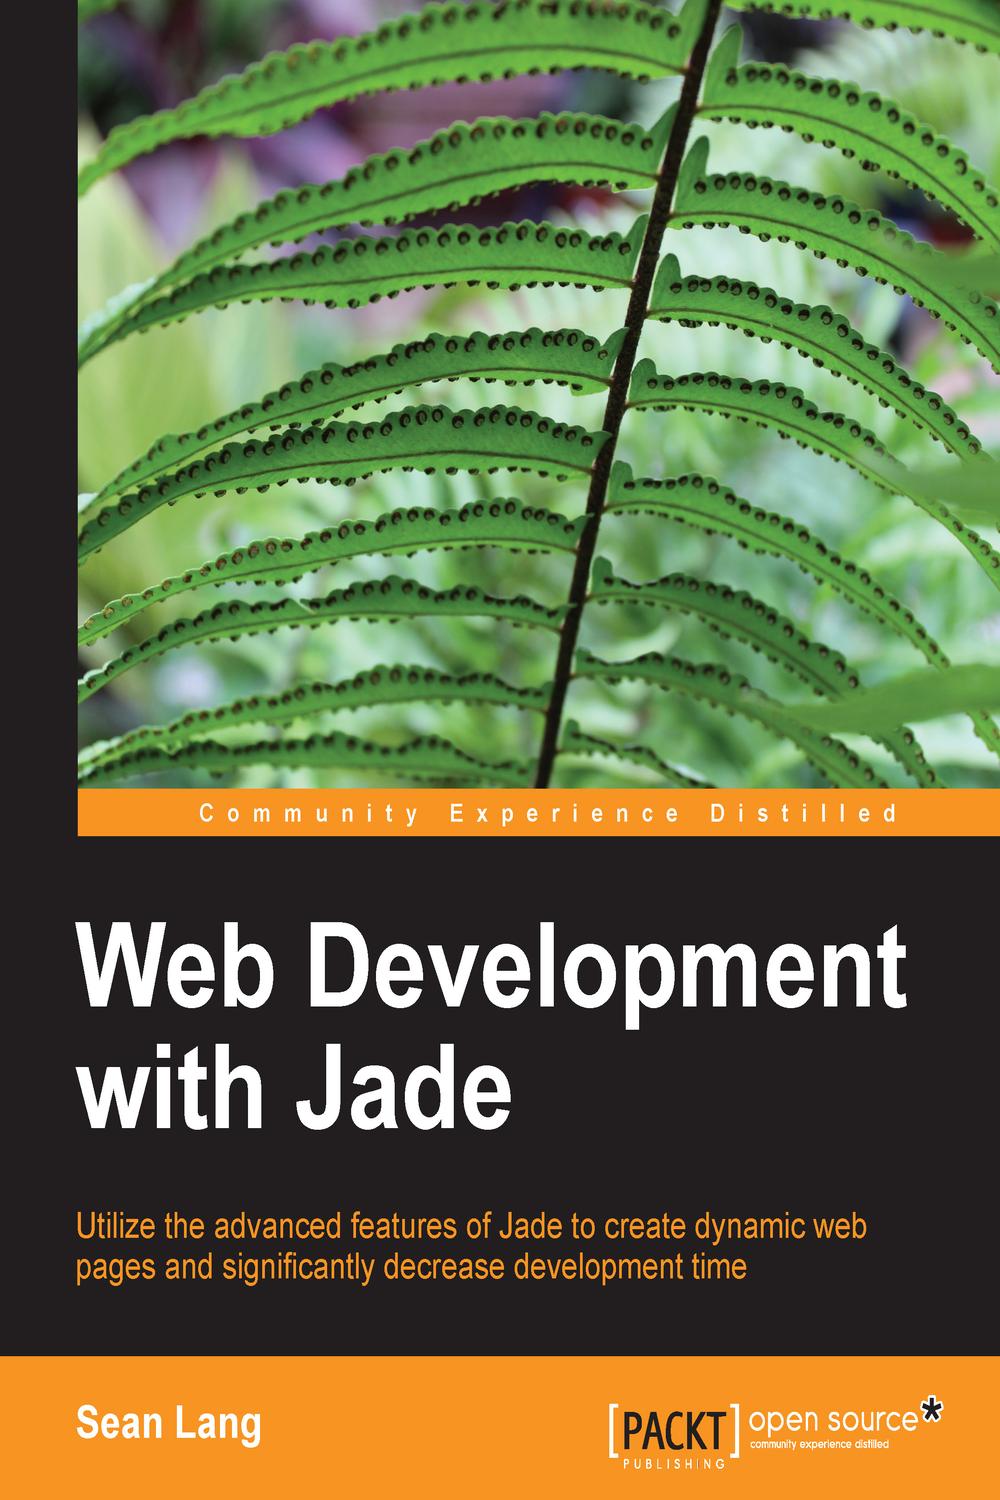 Web Development with Jade - Sean Lang